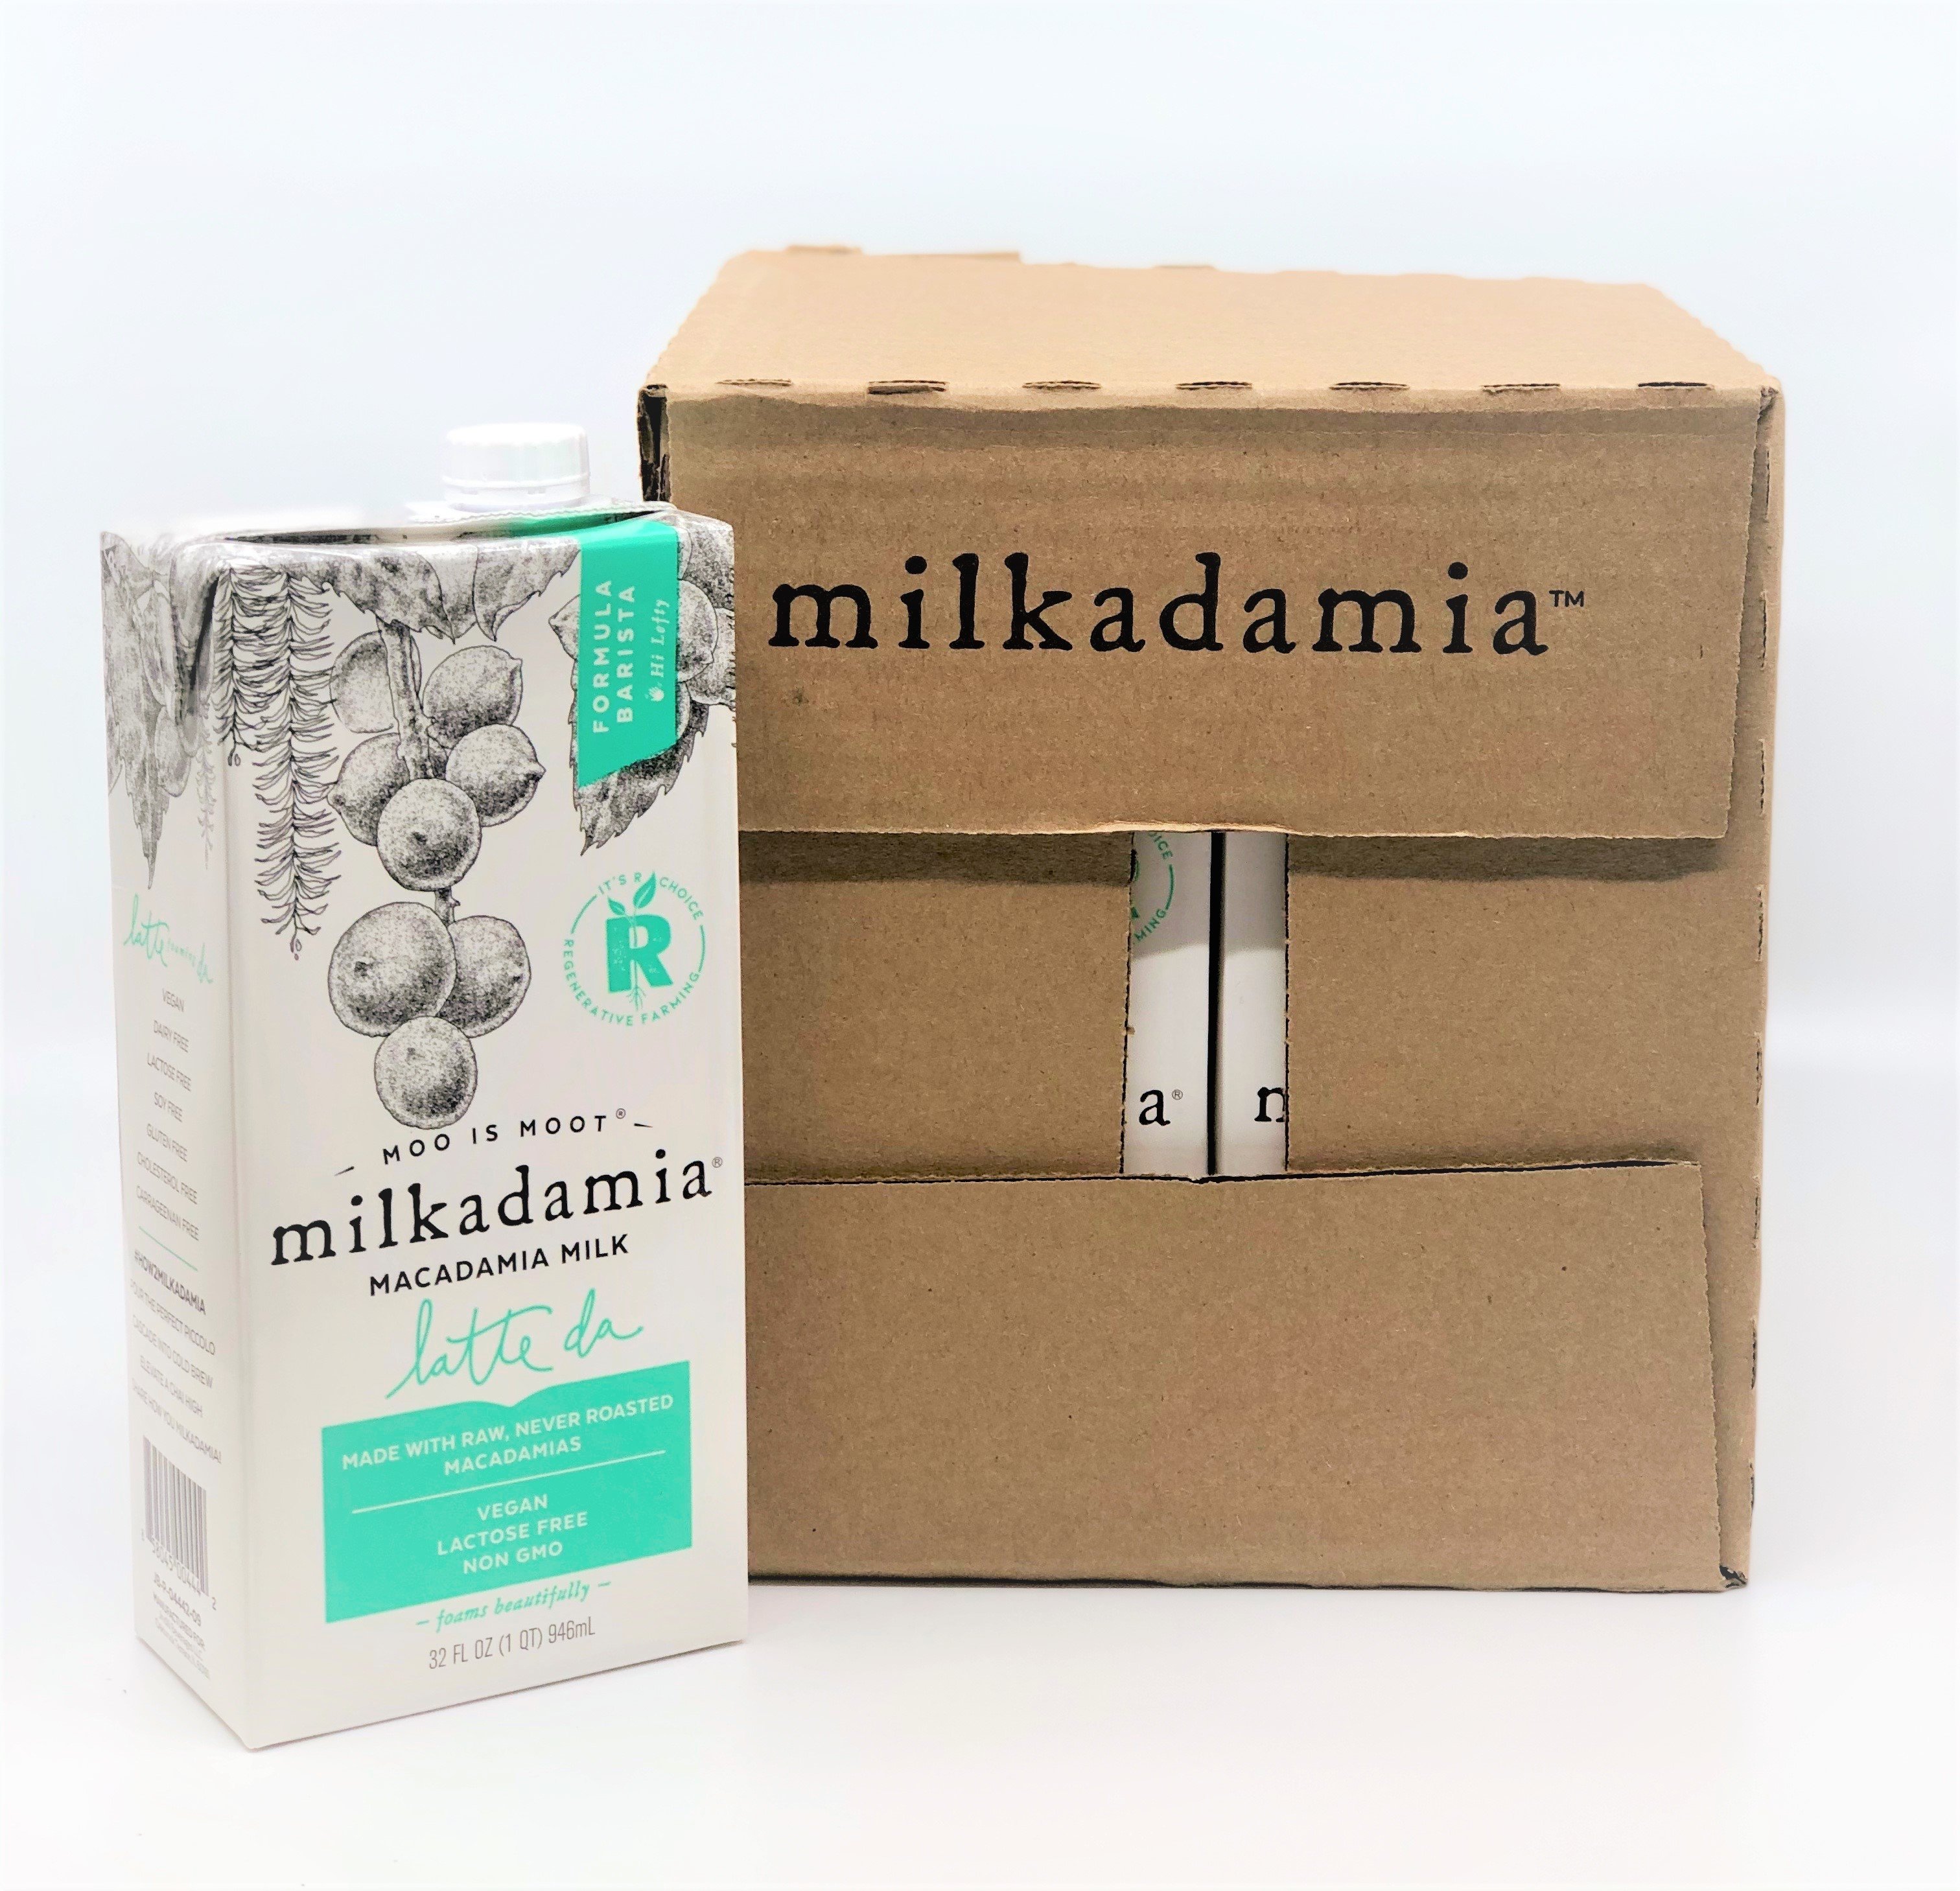 Milkadamia | Boisson de Macadamia Latte de Barista - Caisse de 6